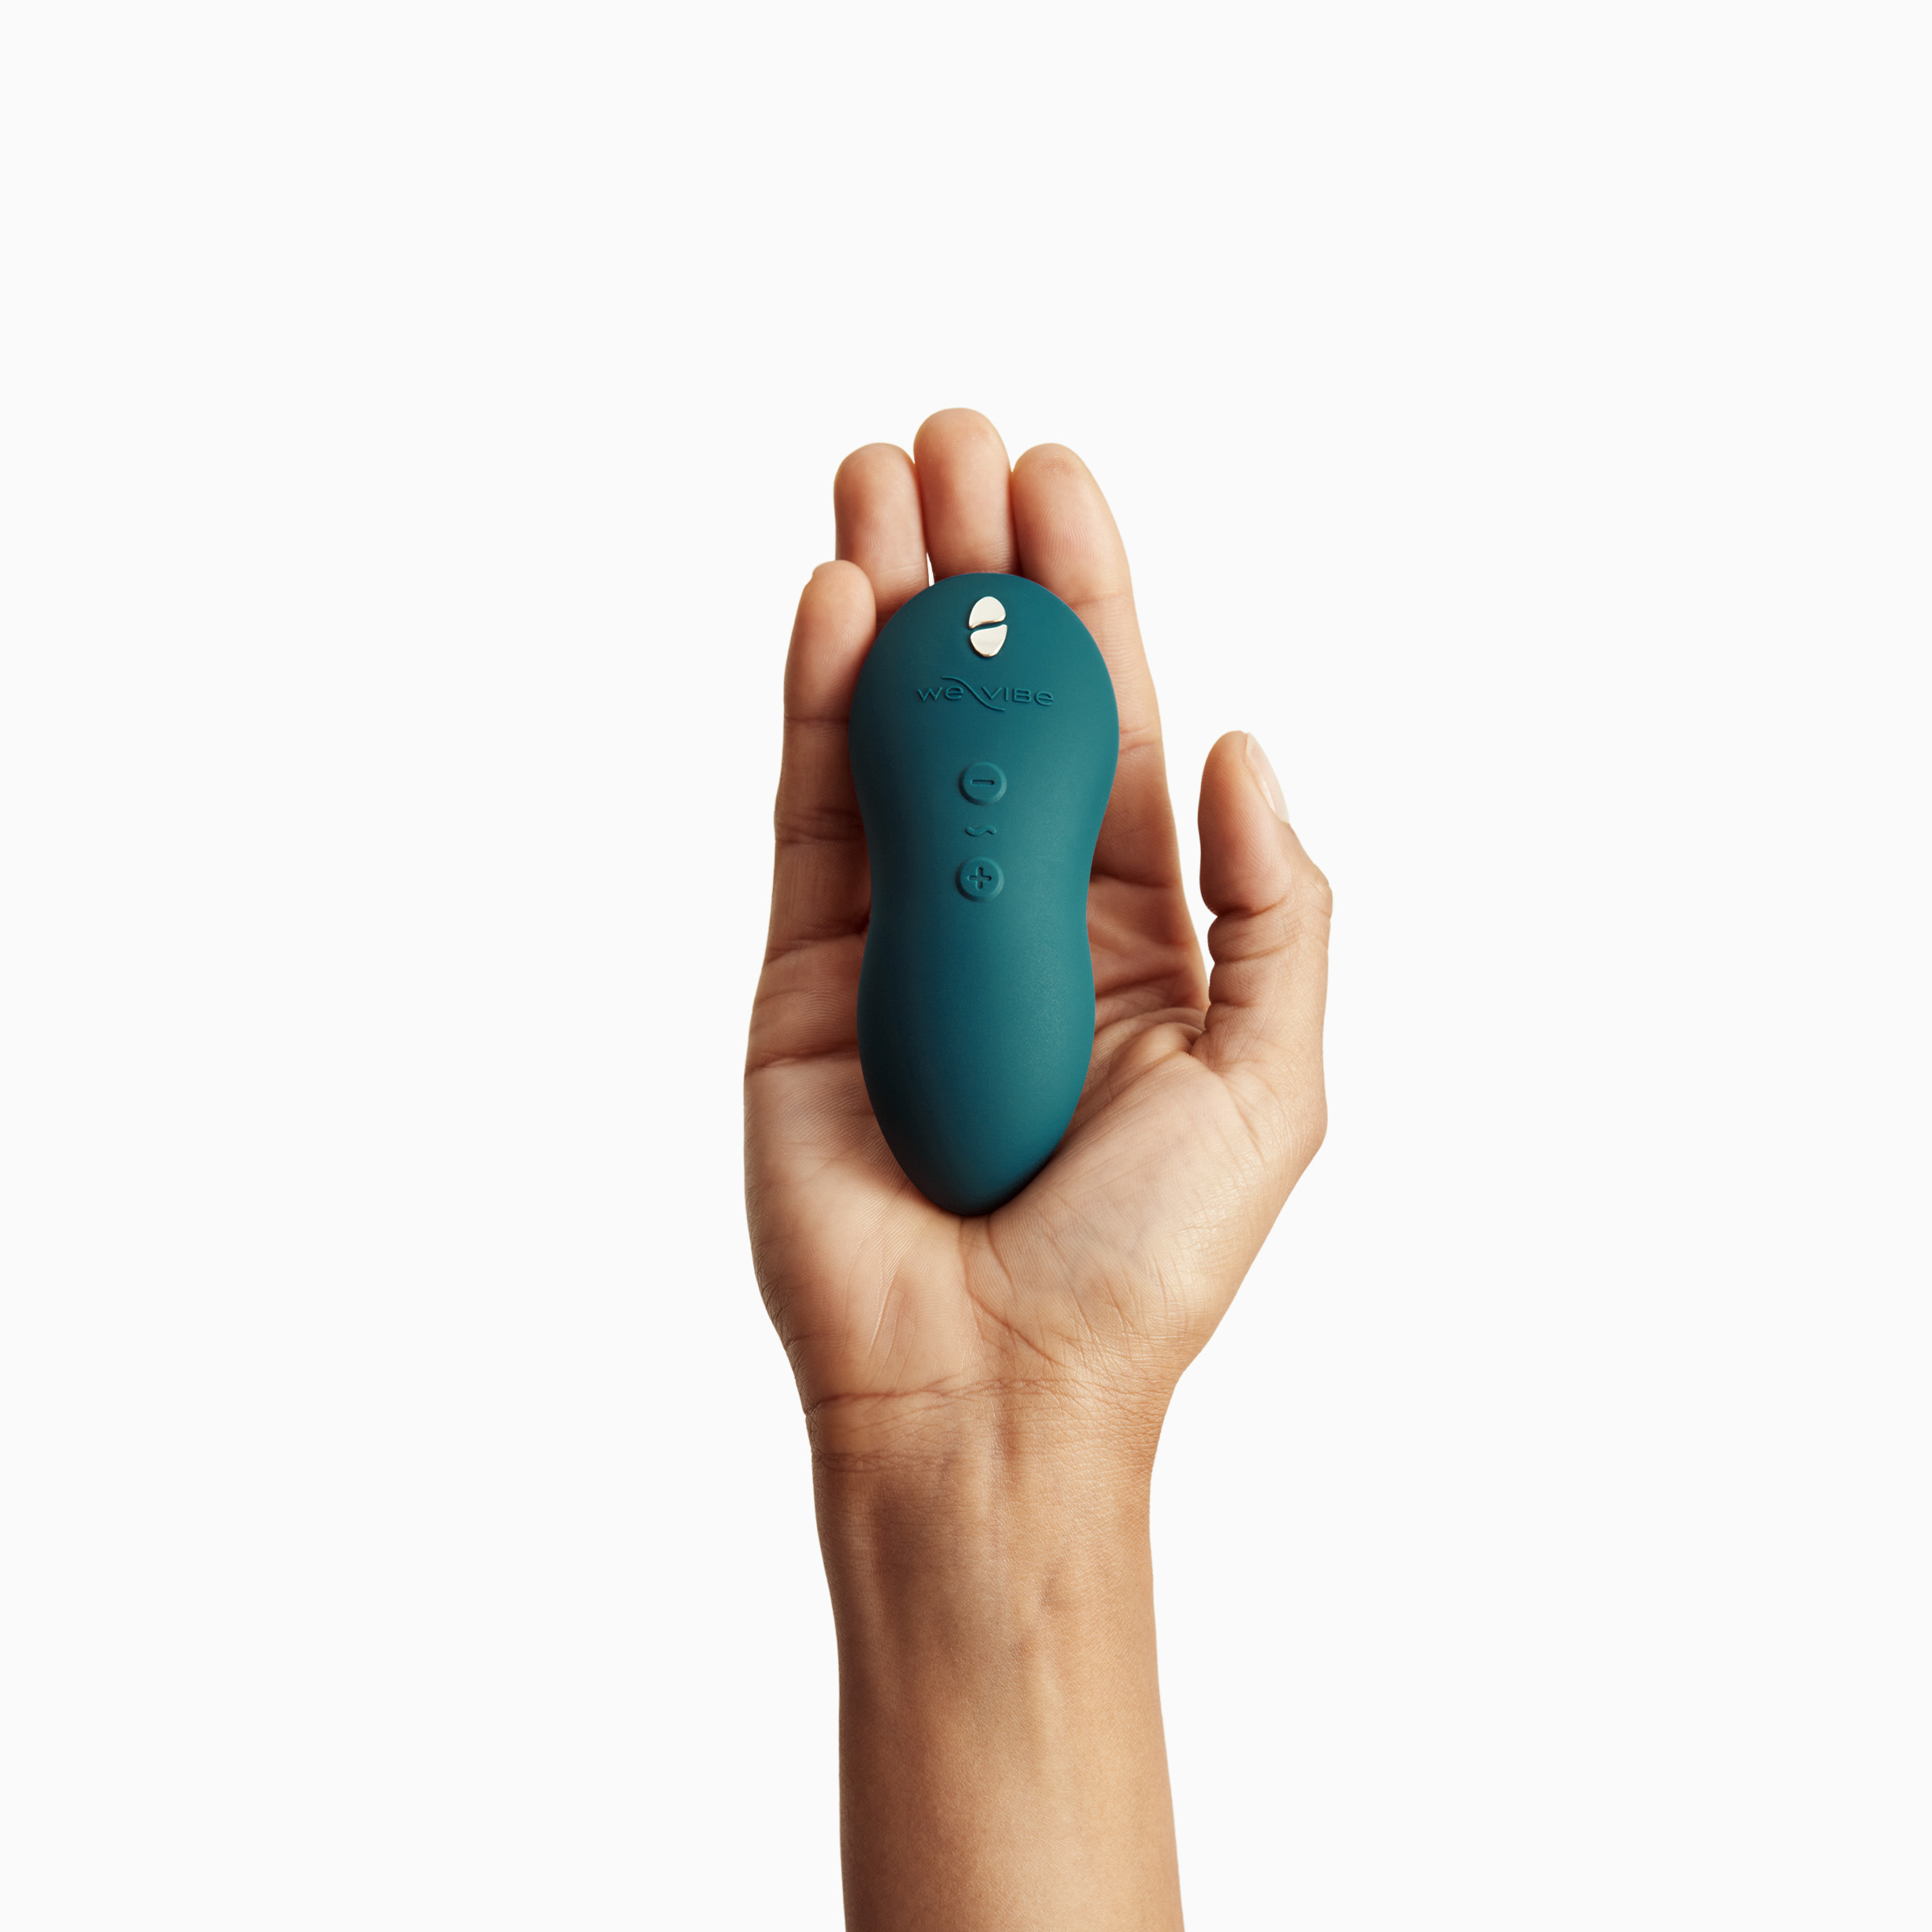 We-Vibe Touch X Multi-Use Vibrating Massager, Green Velvet - image 4 of 10